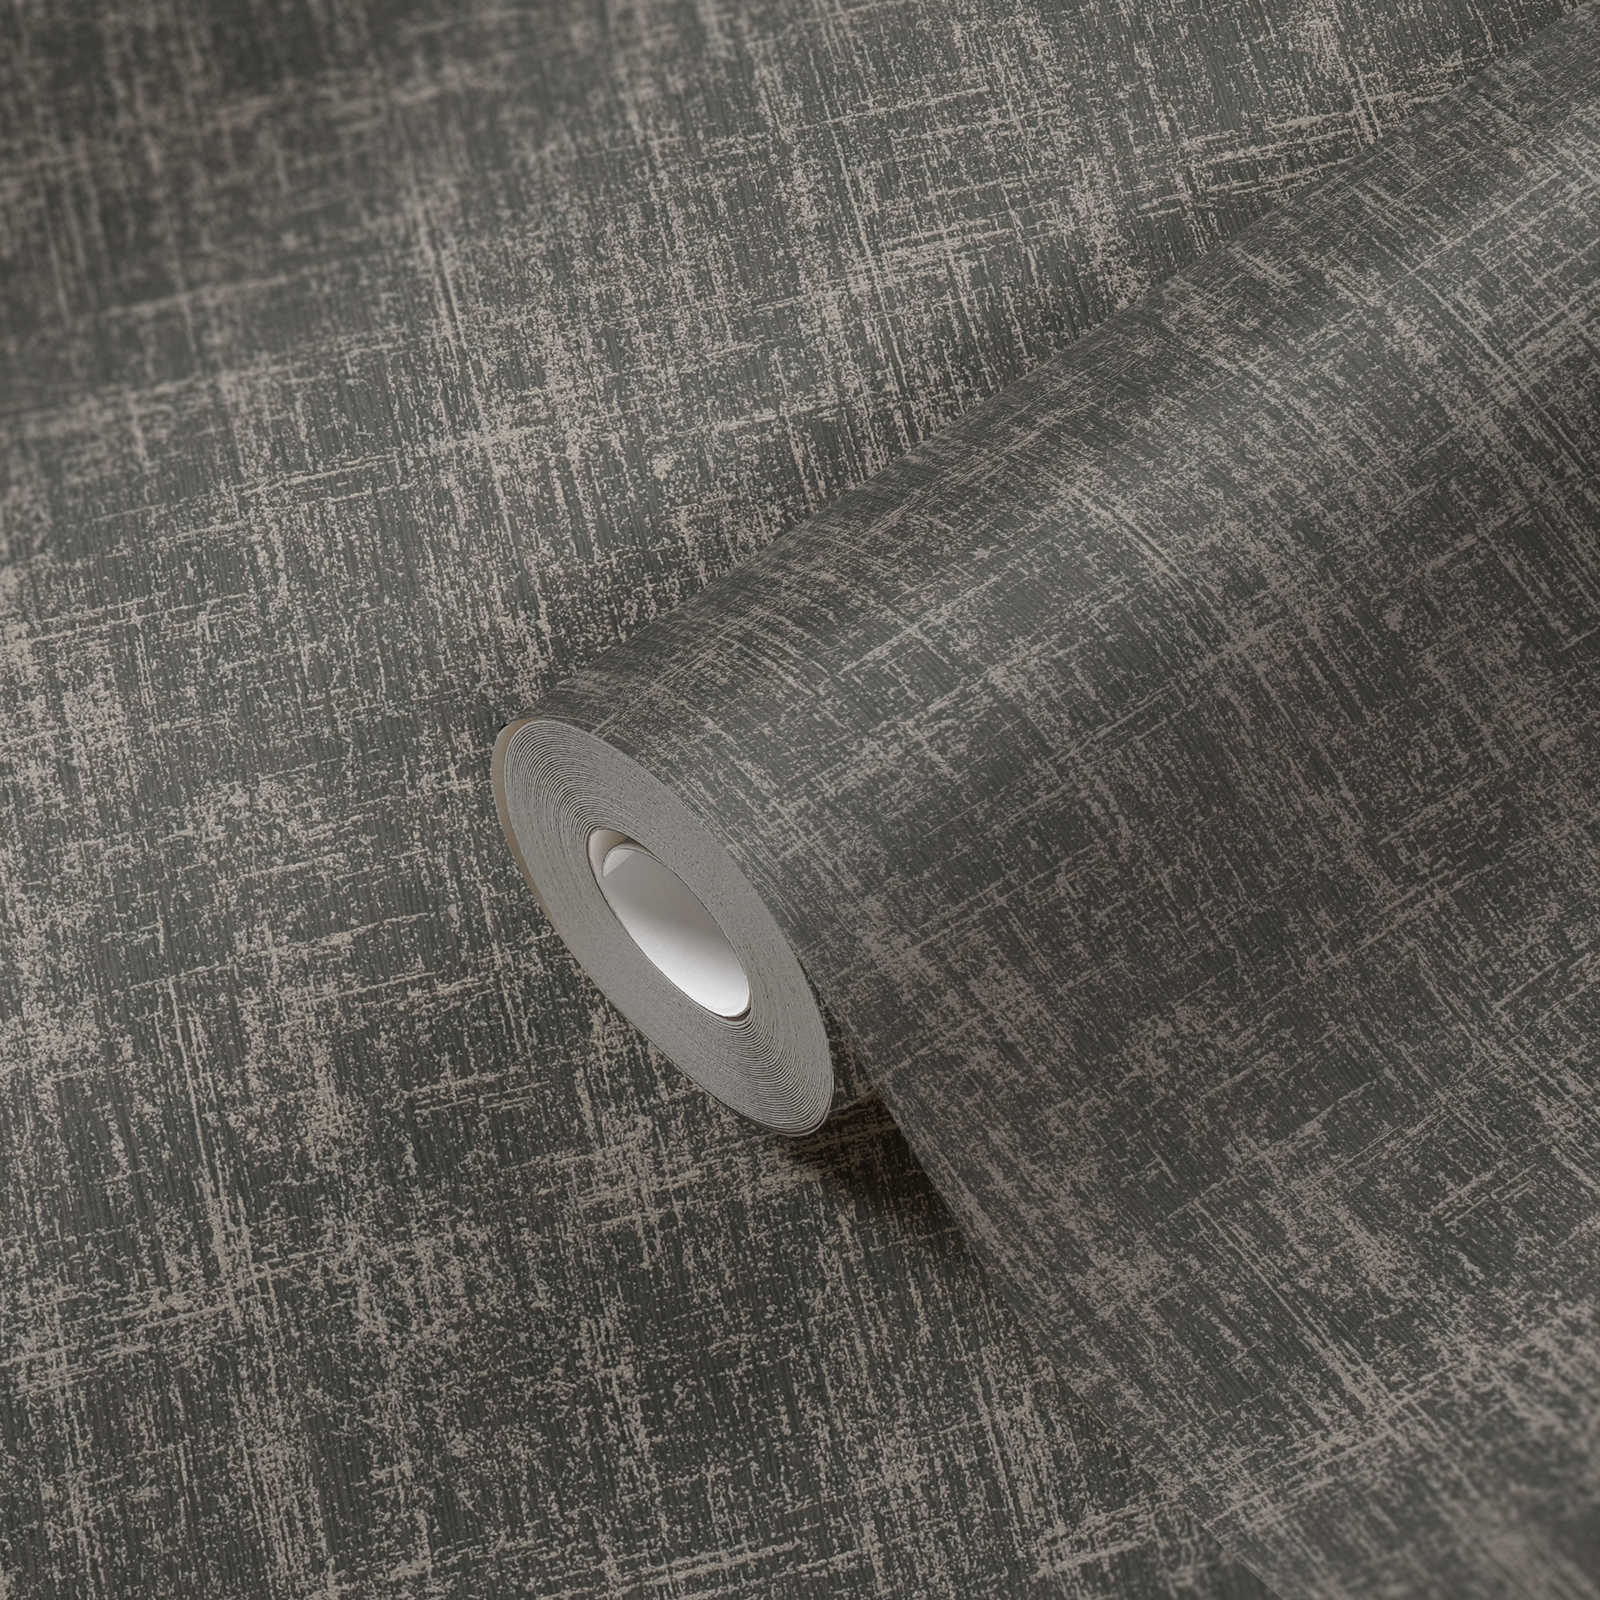             Papel pintado no tejido con efecto metálico moteado - negro, gris
        